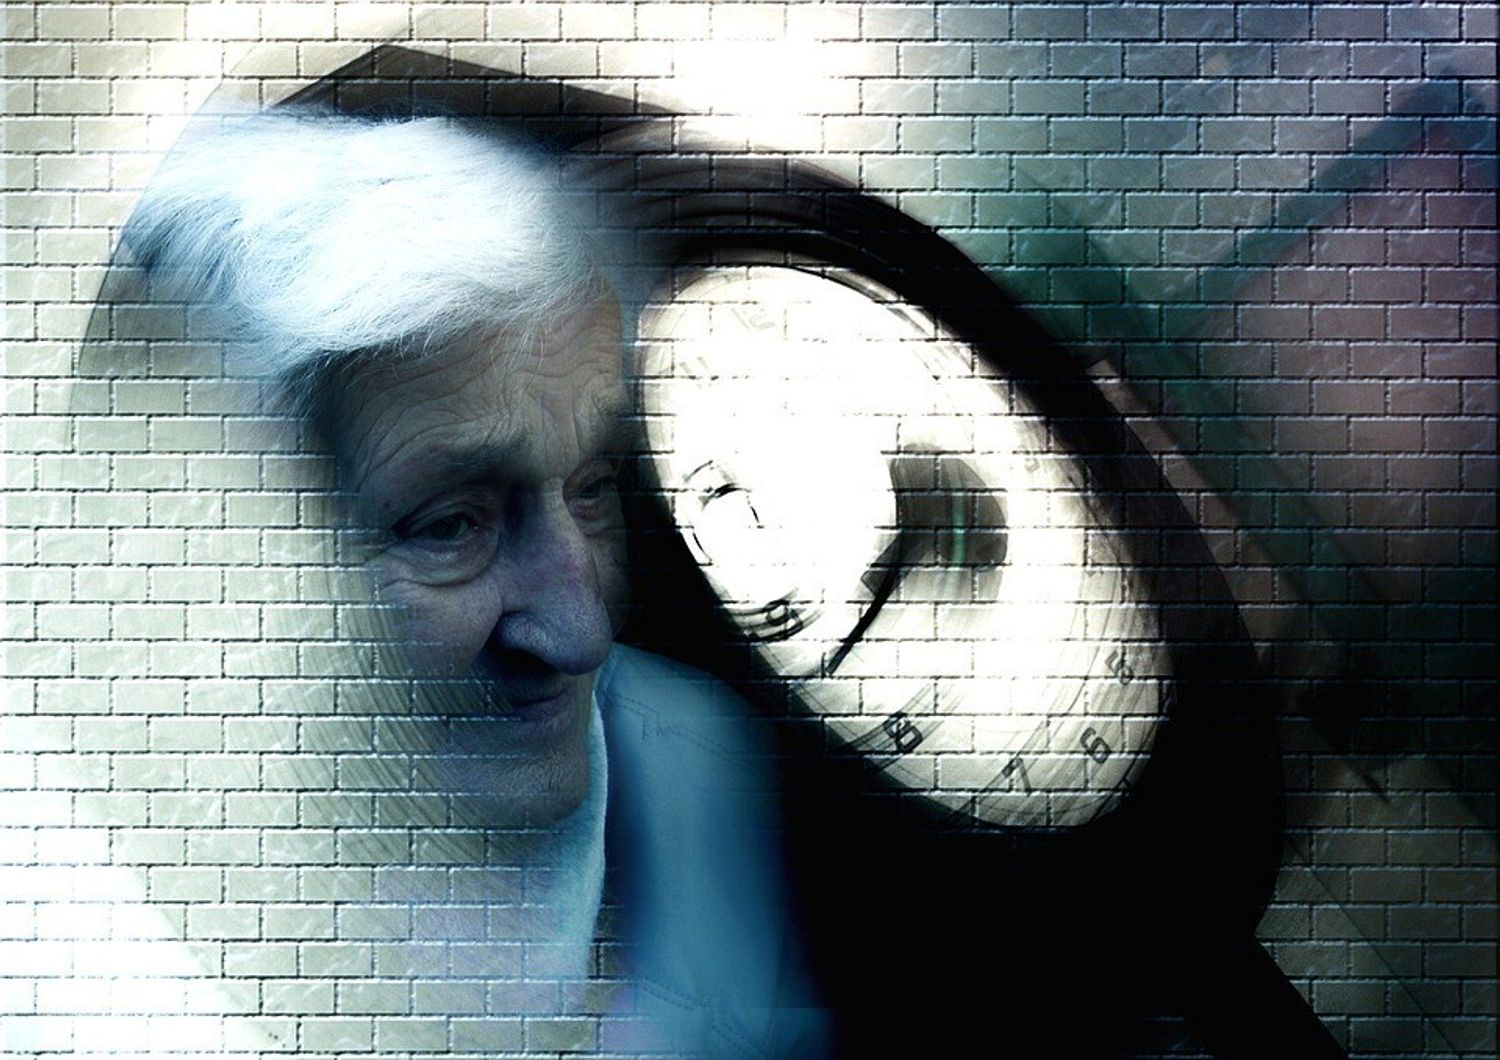 &nbsp;Vecchia donna demenza senile morbo di Alzhemeir - pixabay